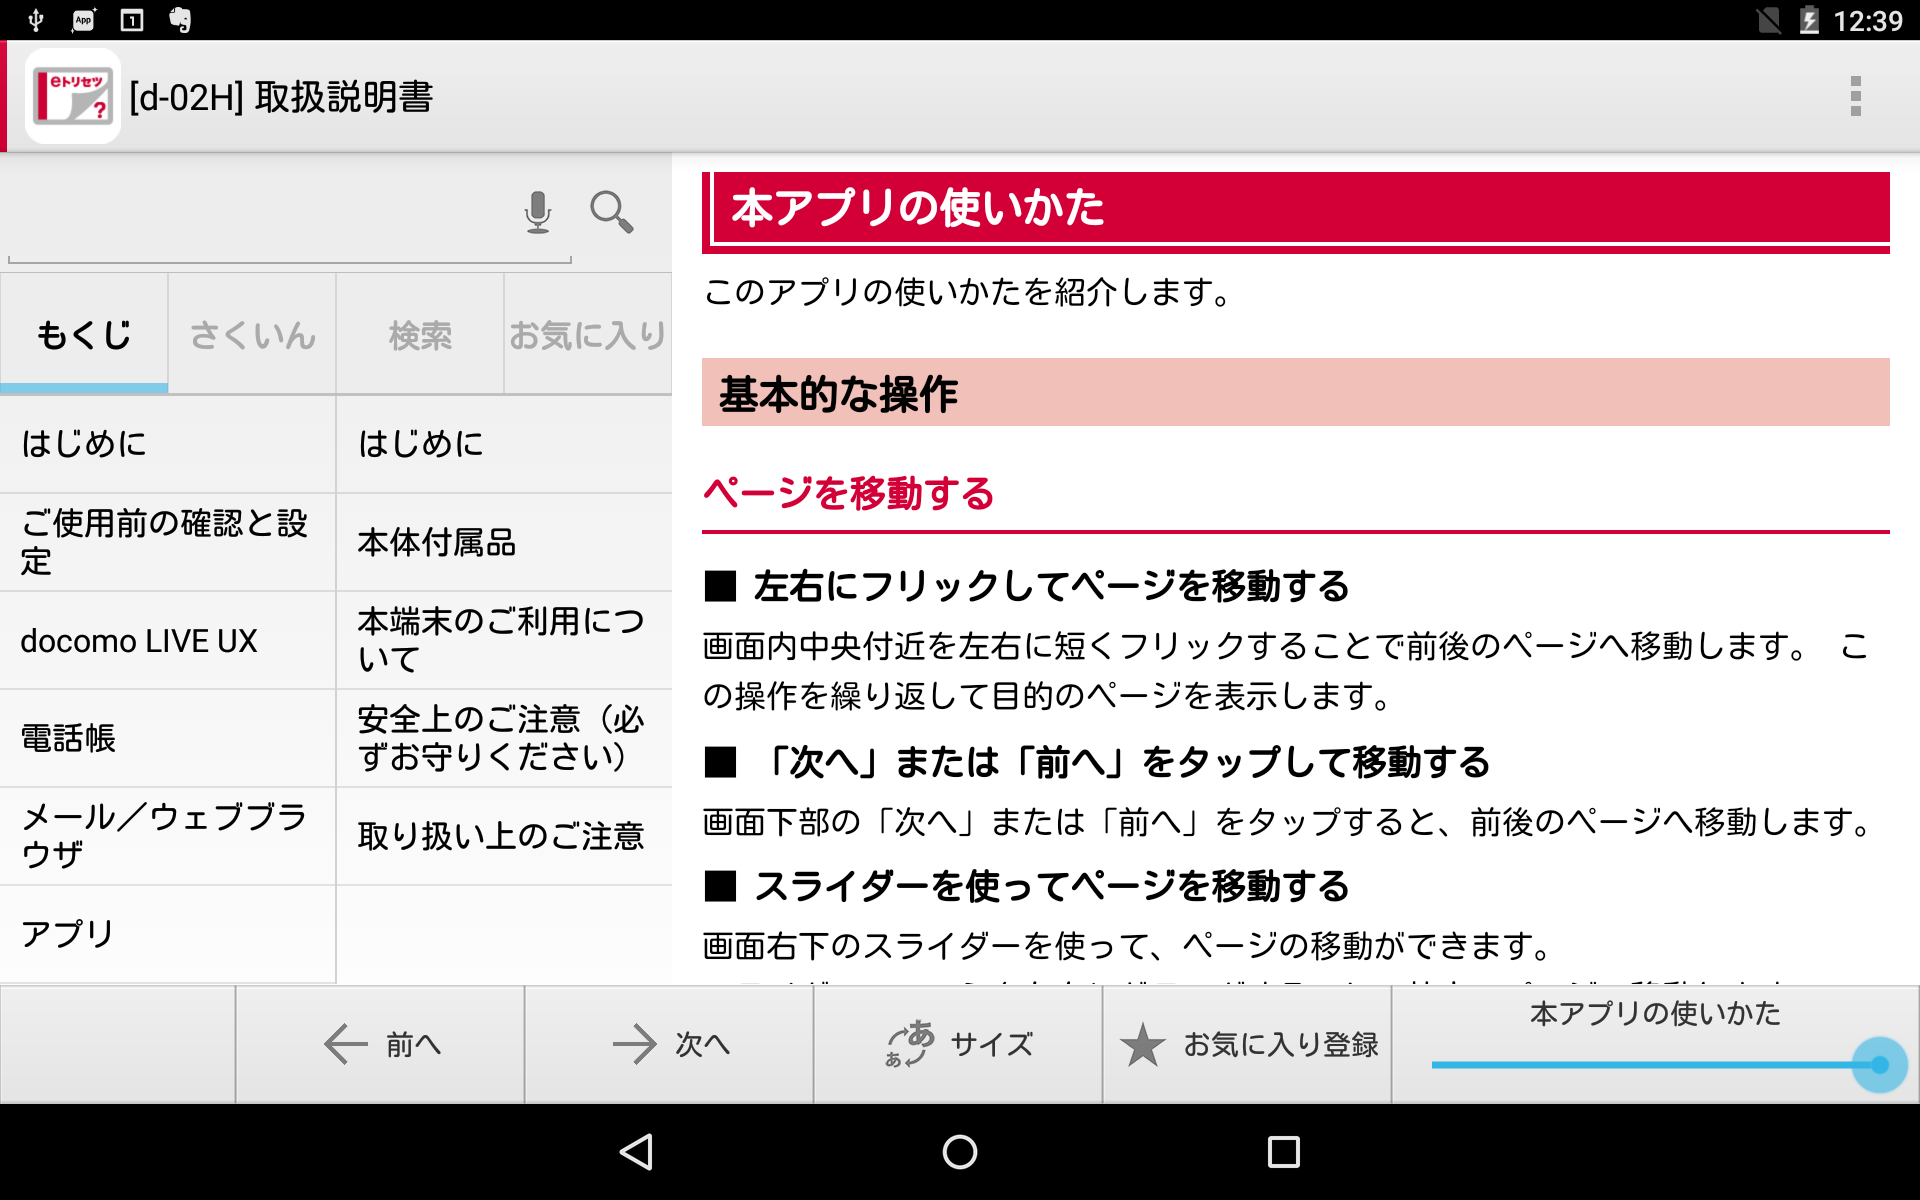 Android application d-02H 取扱説明書 screenshort